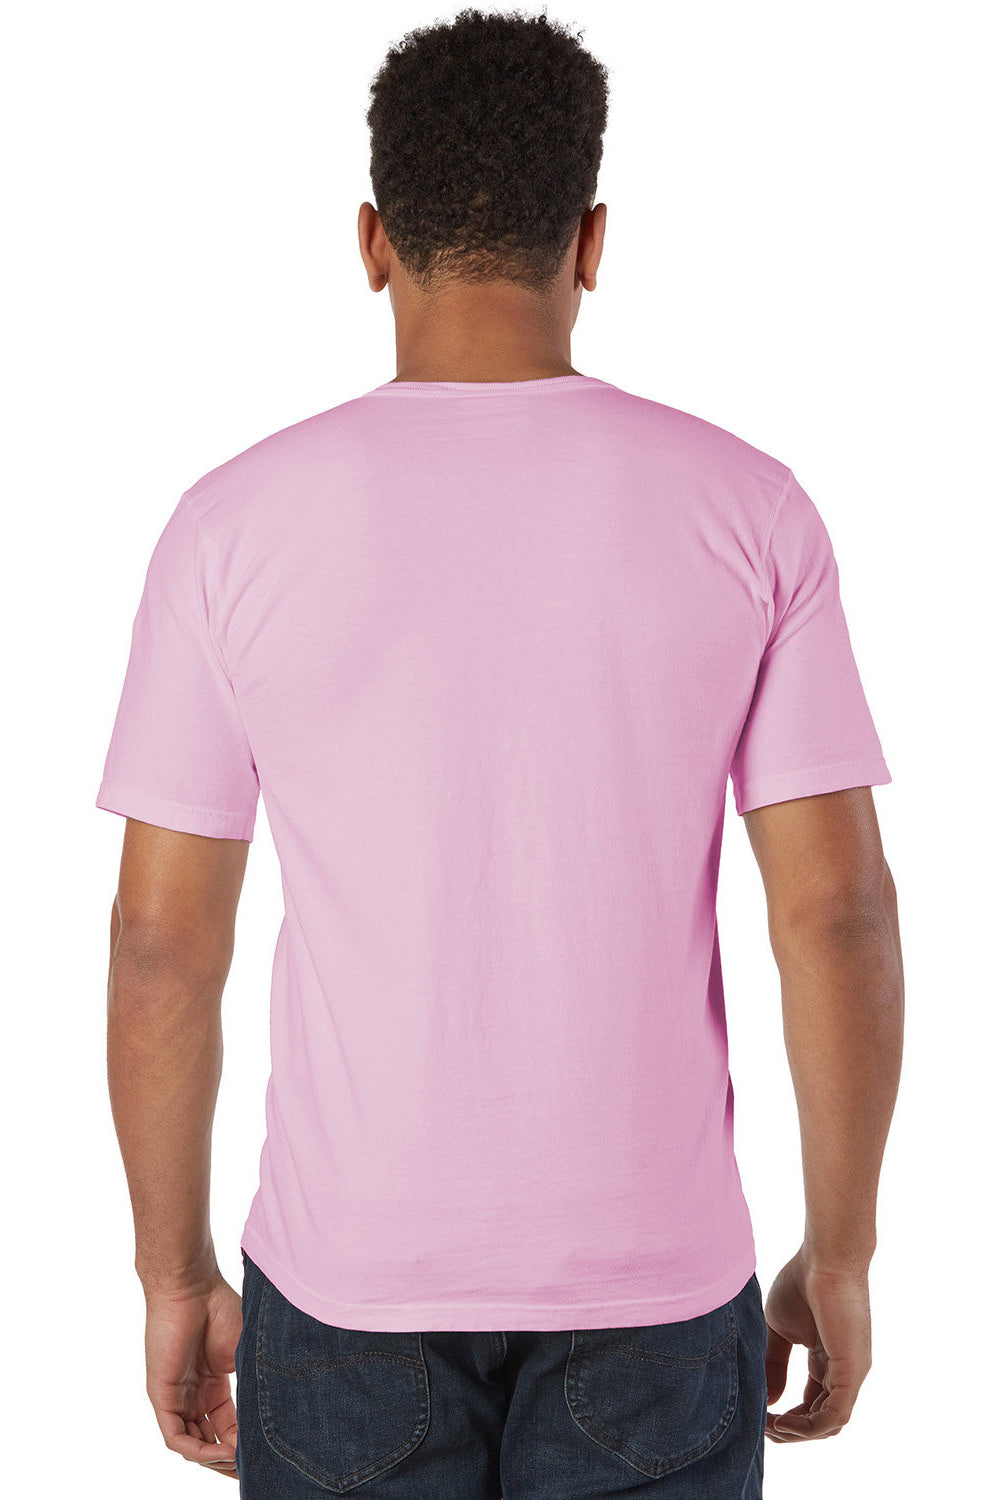 Champion CD100 Mens Garment Dyed Short Sleeve Crewneck T-Shirt Candy Pink Model Back